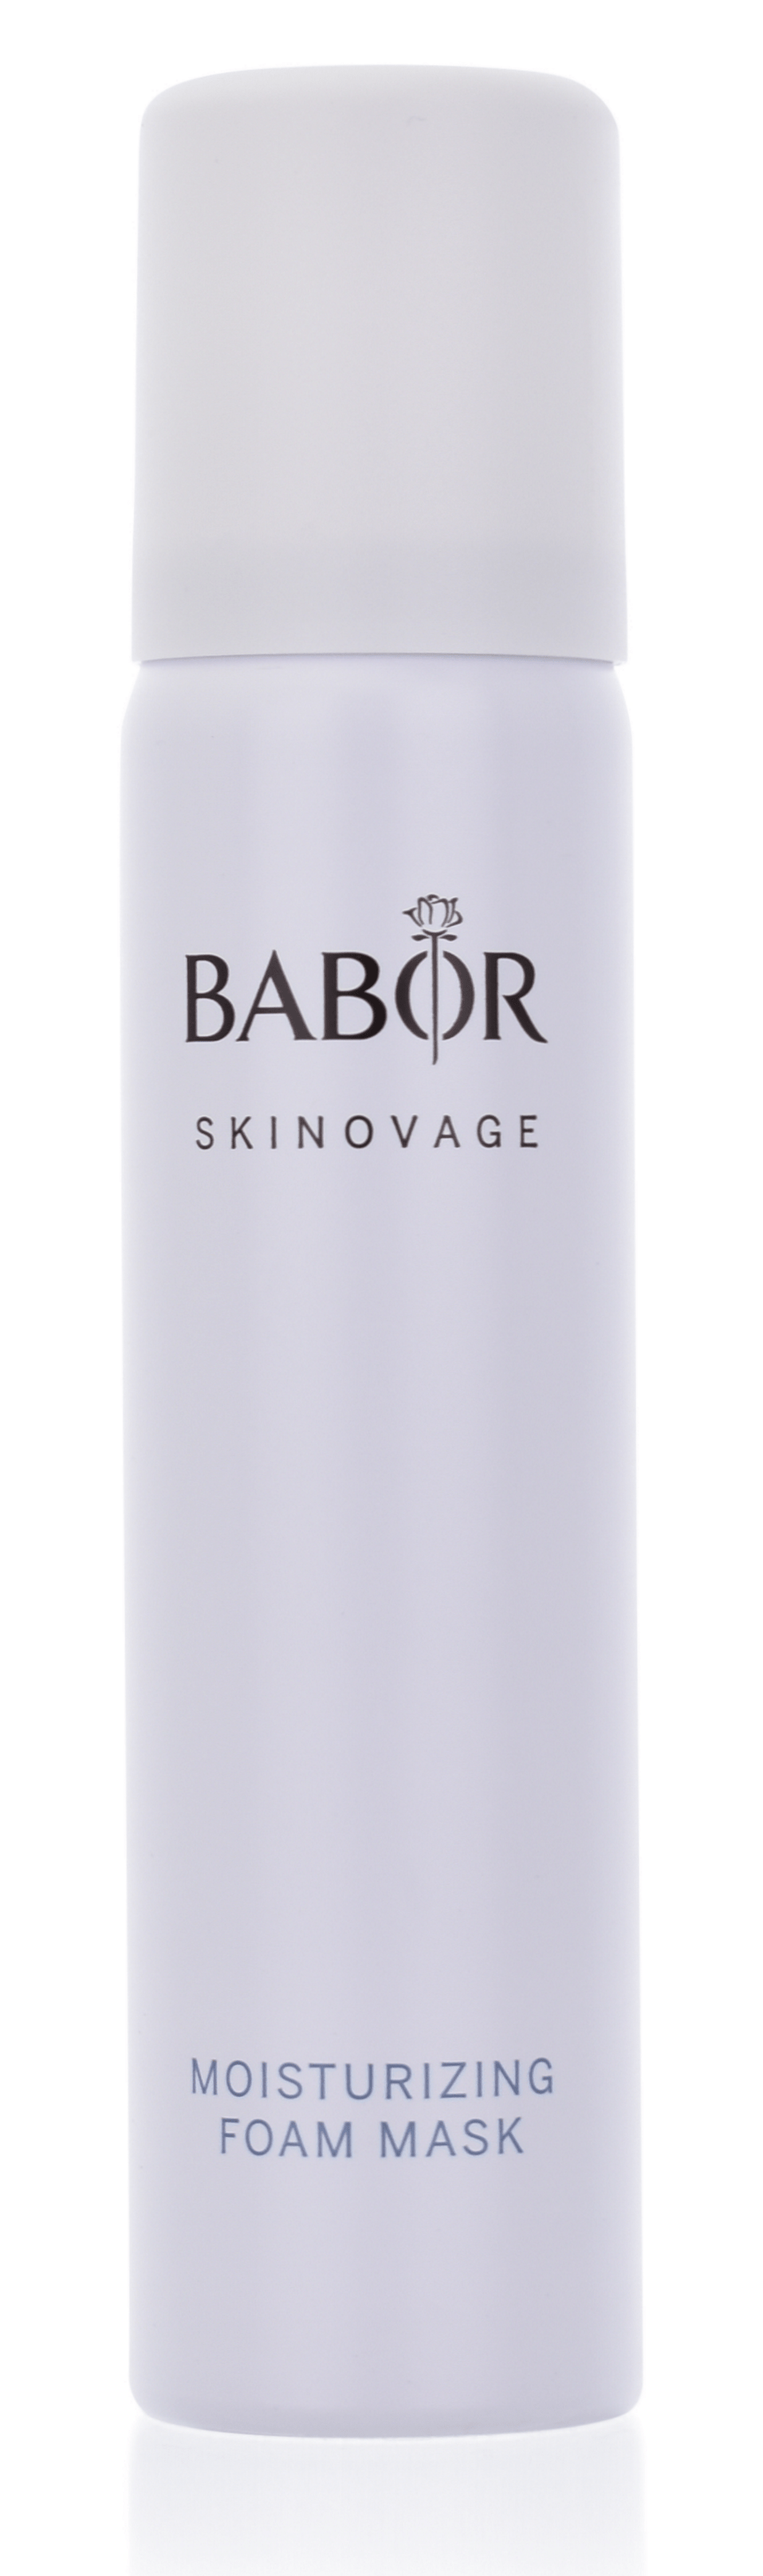 BABOR Skinovage - Moisturizing Foam Mask 75ml